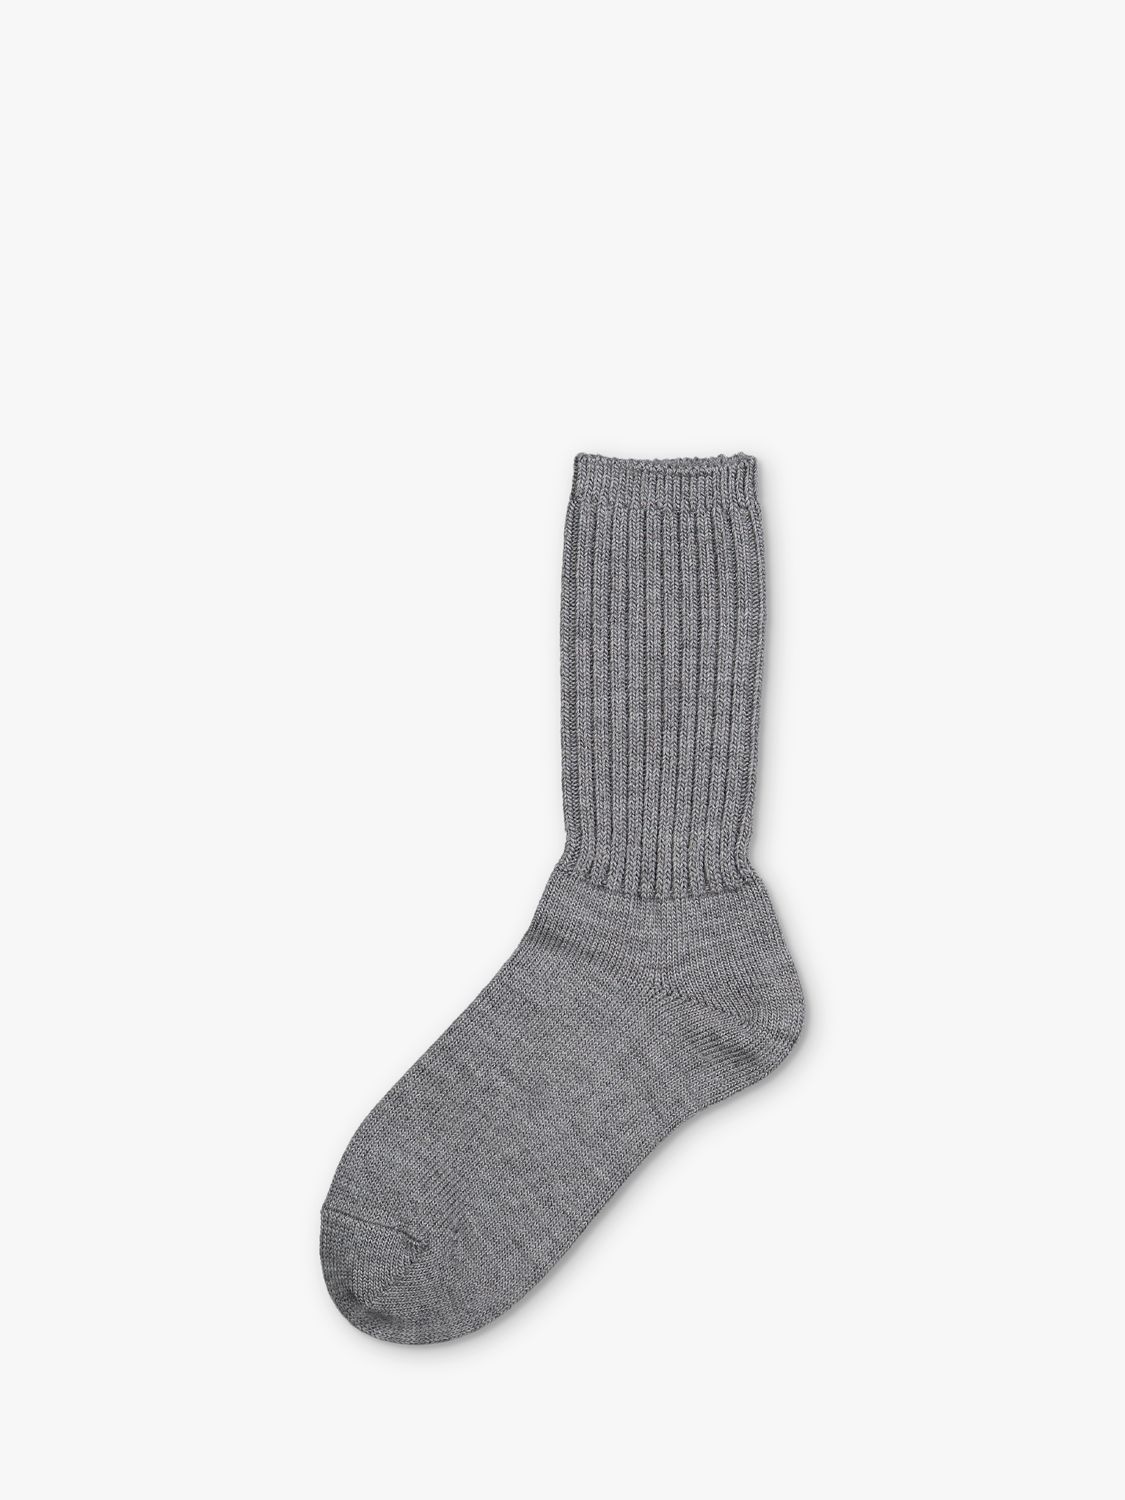 Polarn O. Pyret Baby Thick Wool Socks, Grey at John Lewis & Partners